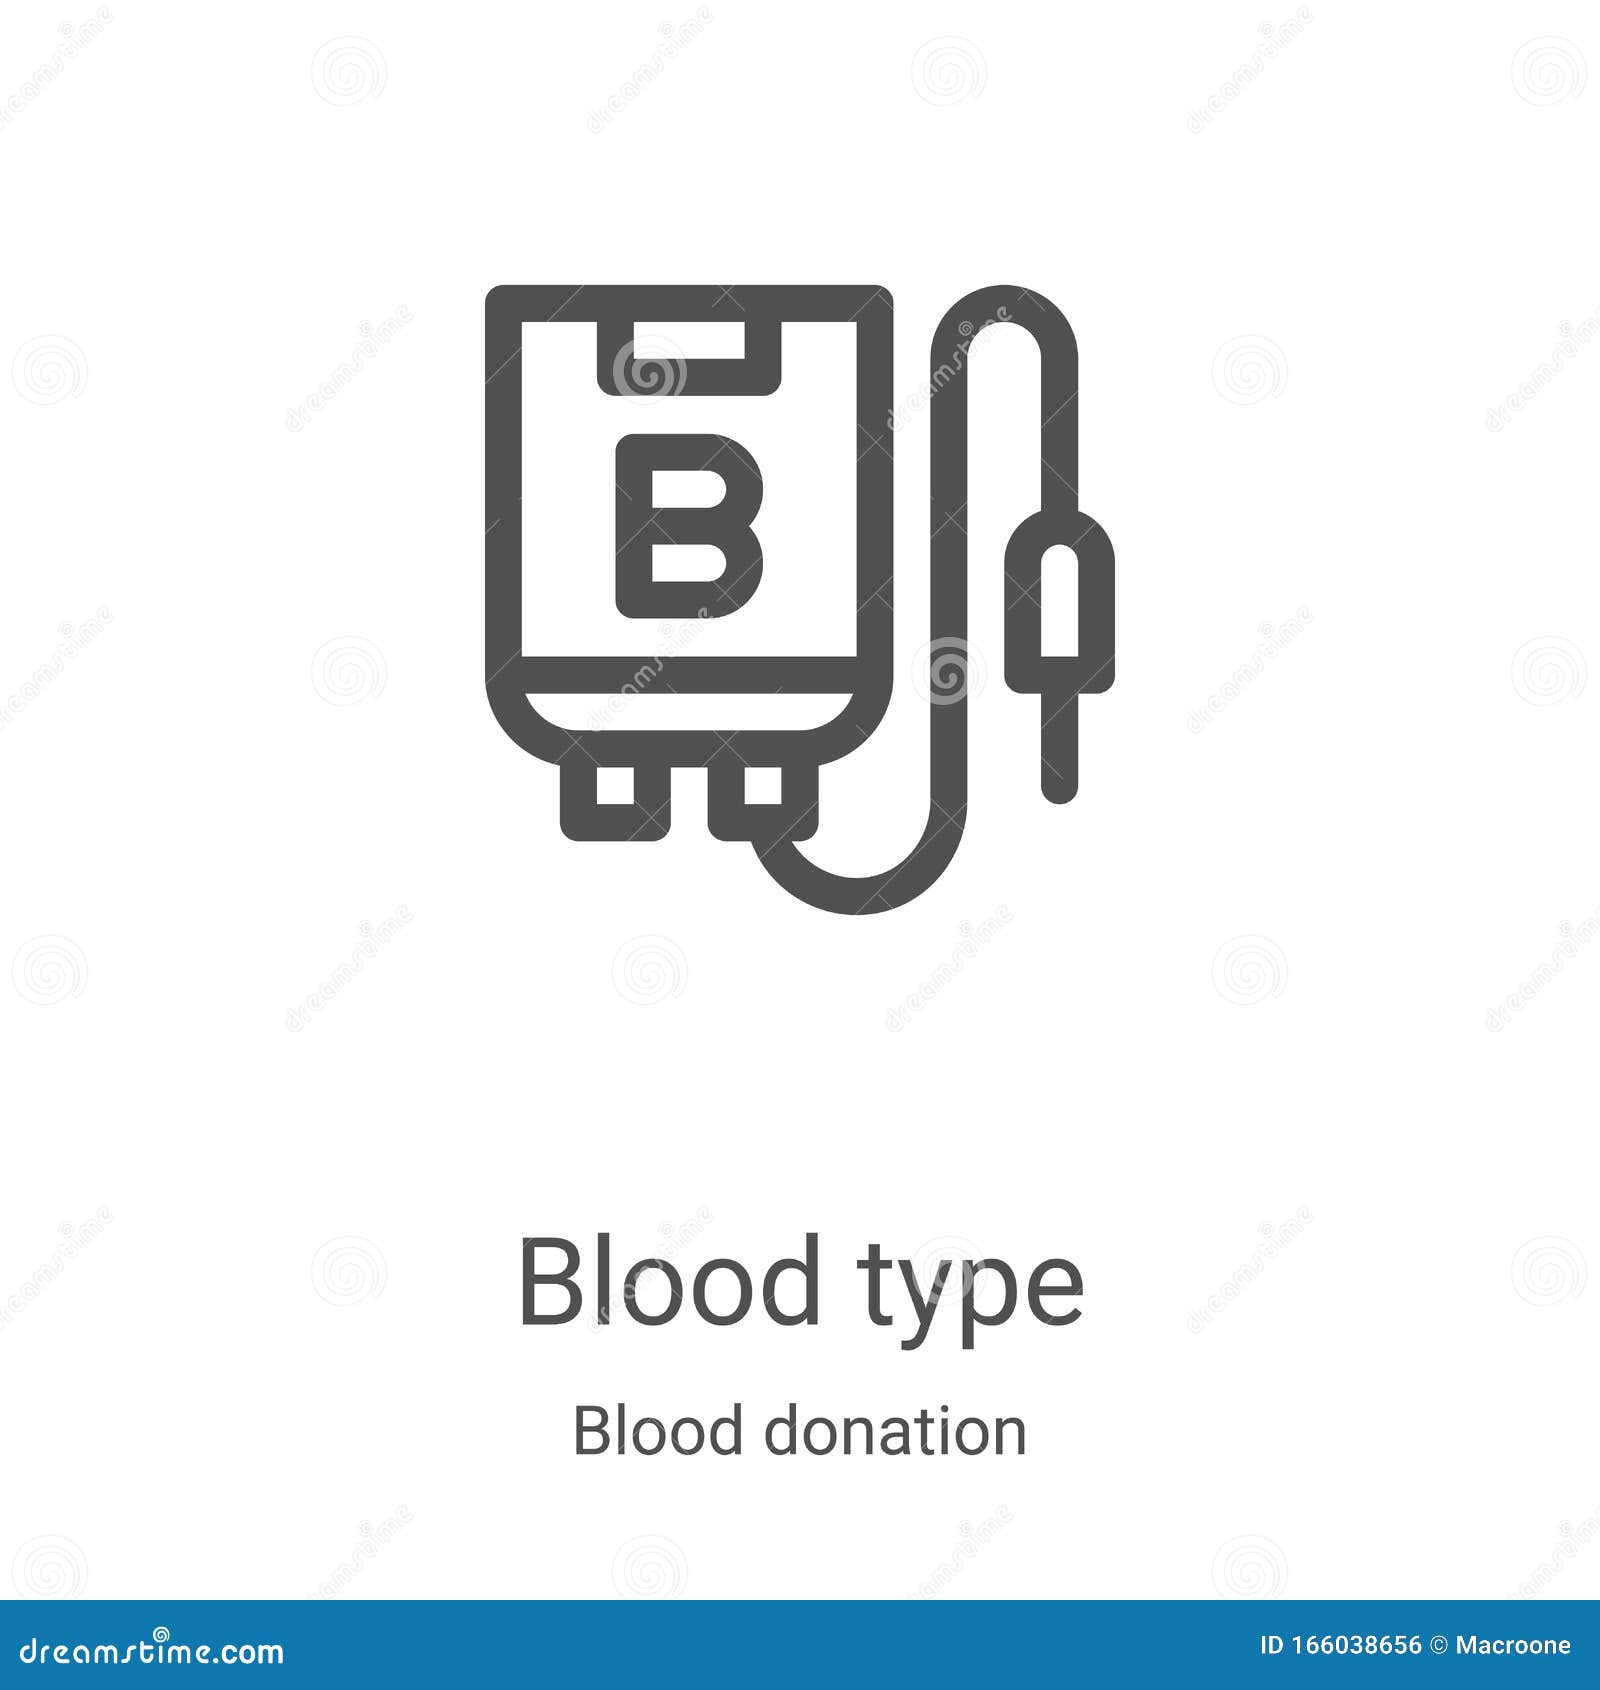 Vinshi Blood Collection Centre